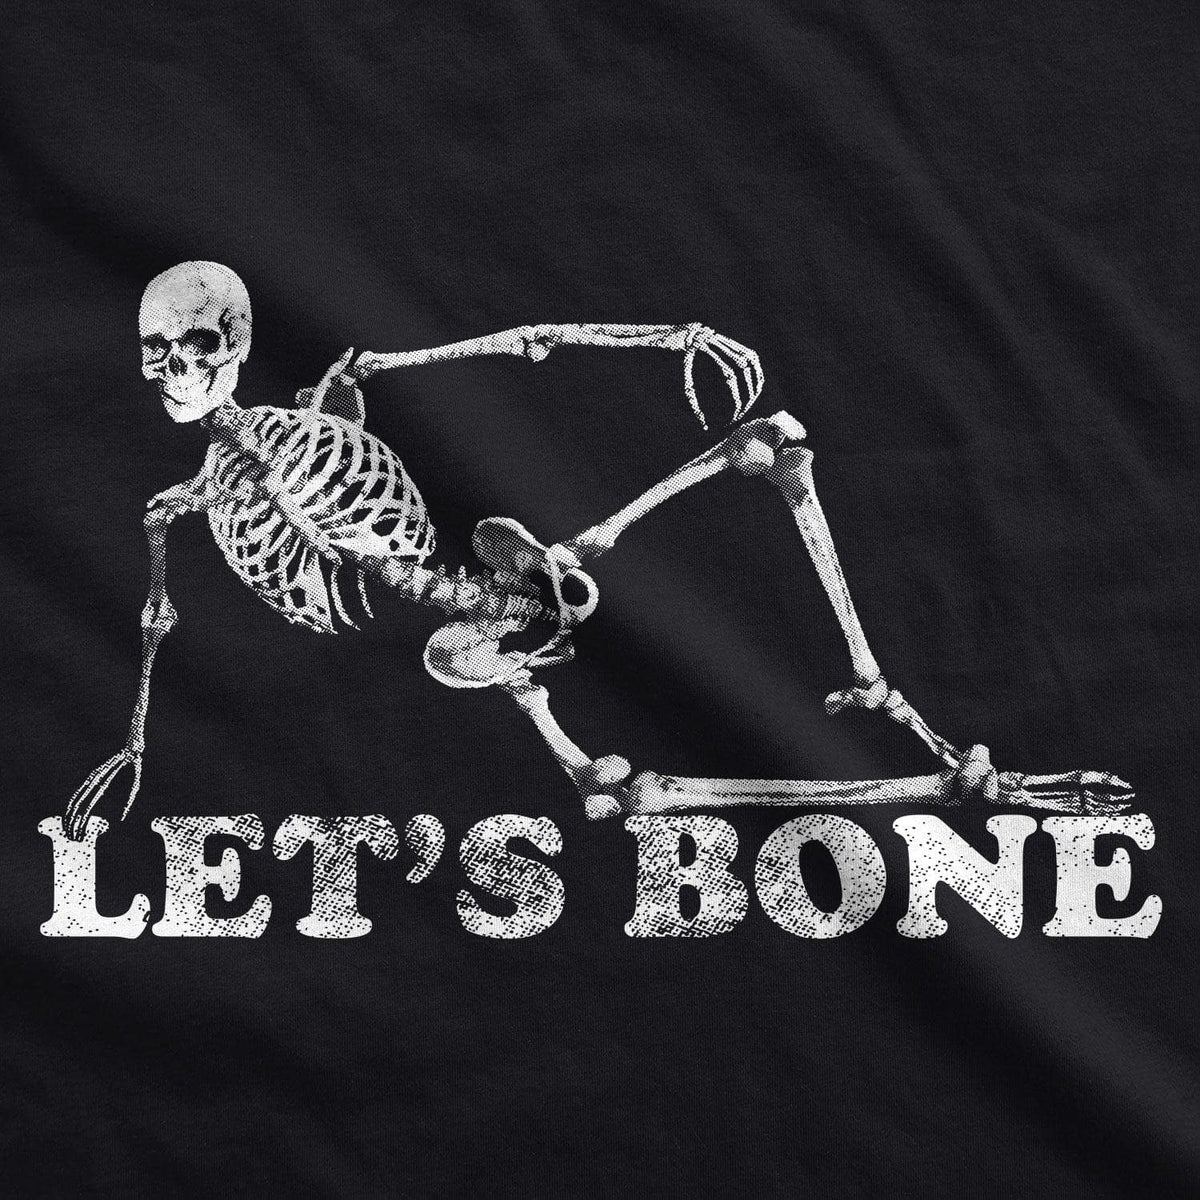 Let&#39;s Bone Men&#39;s Tshirt  -  Crazy Dog T-Shirts